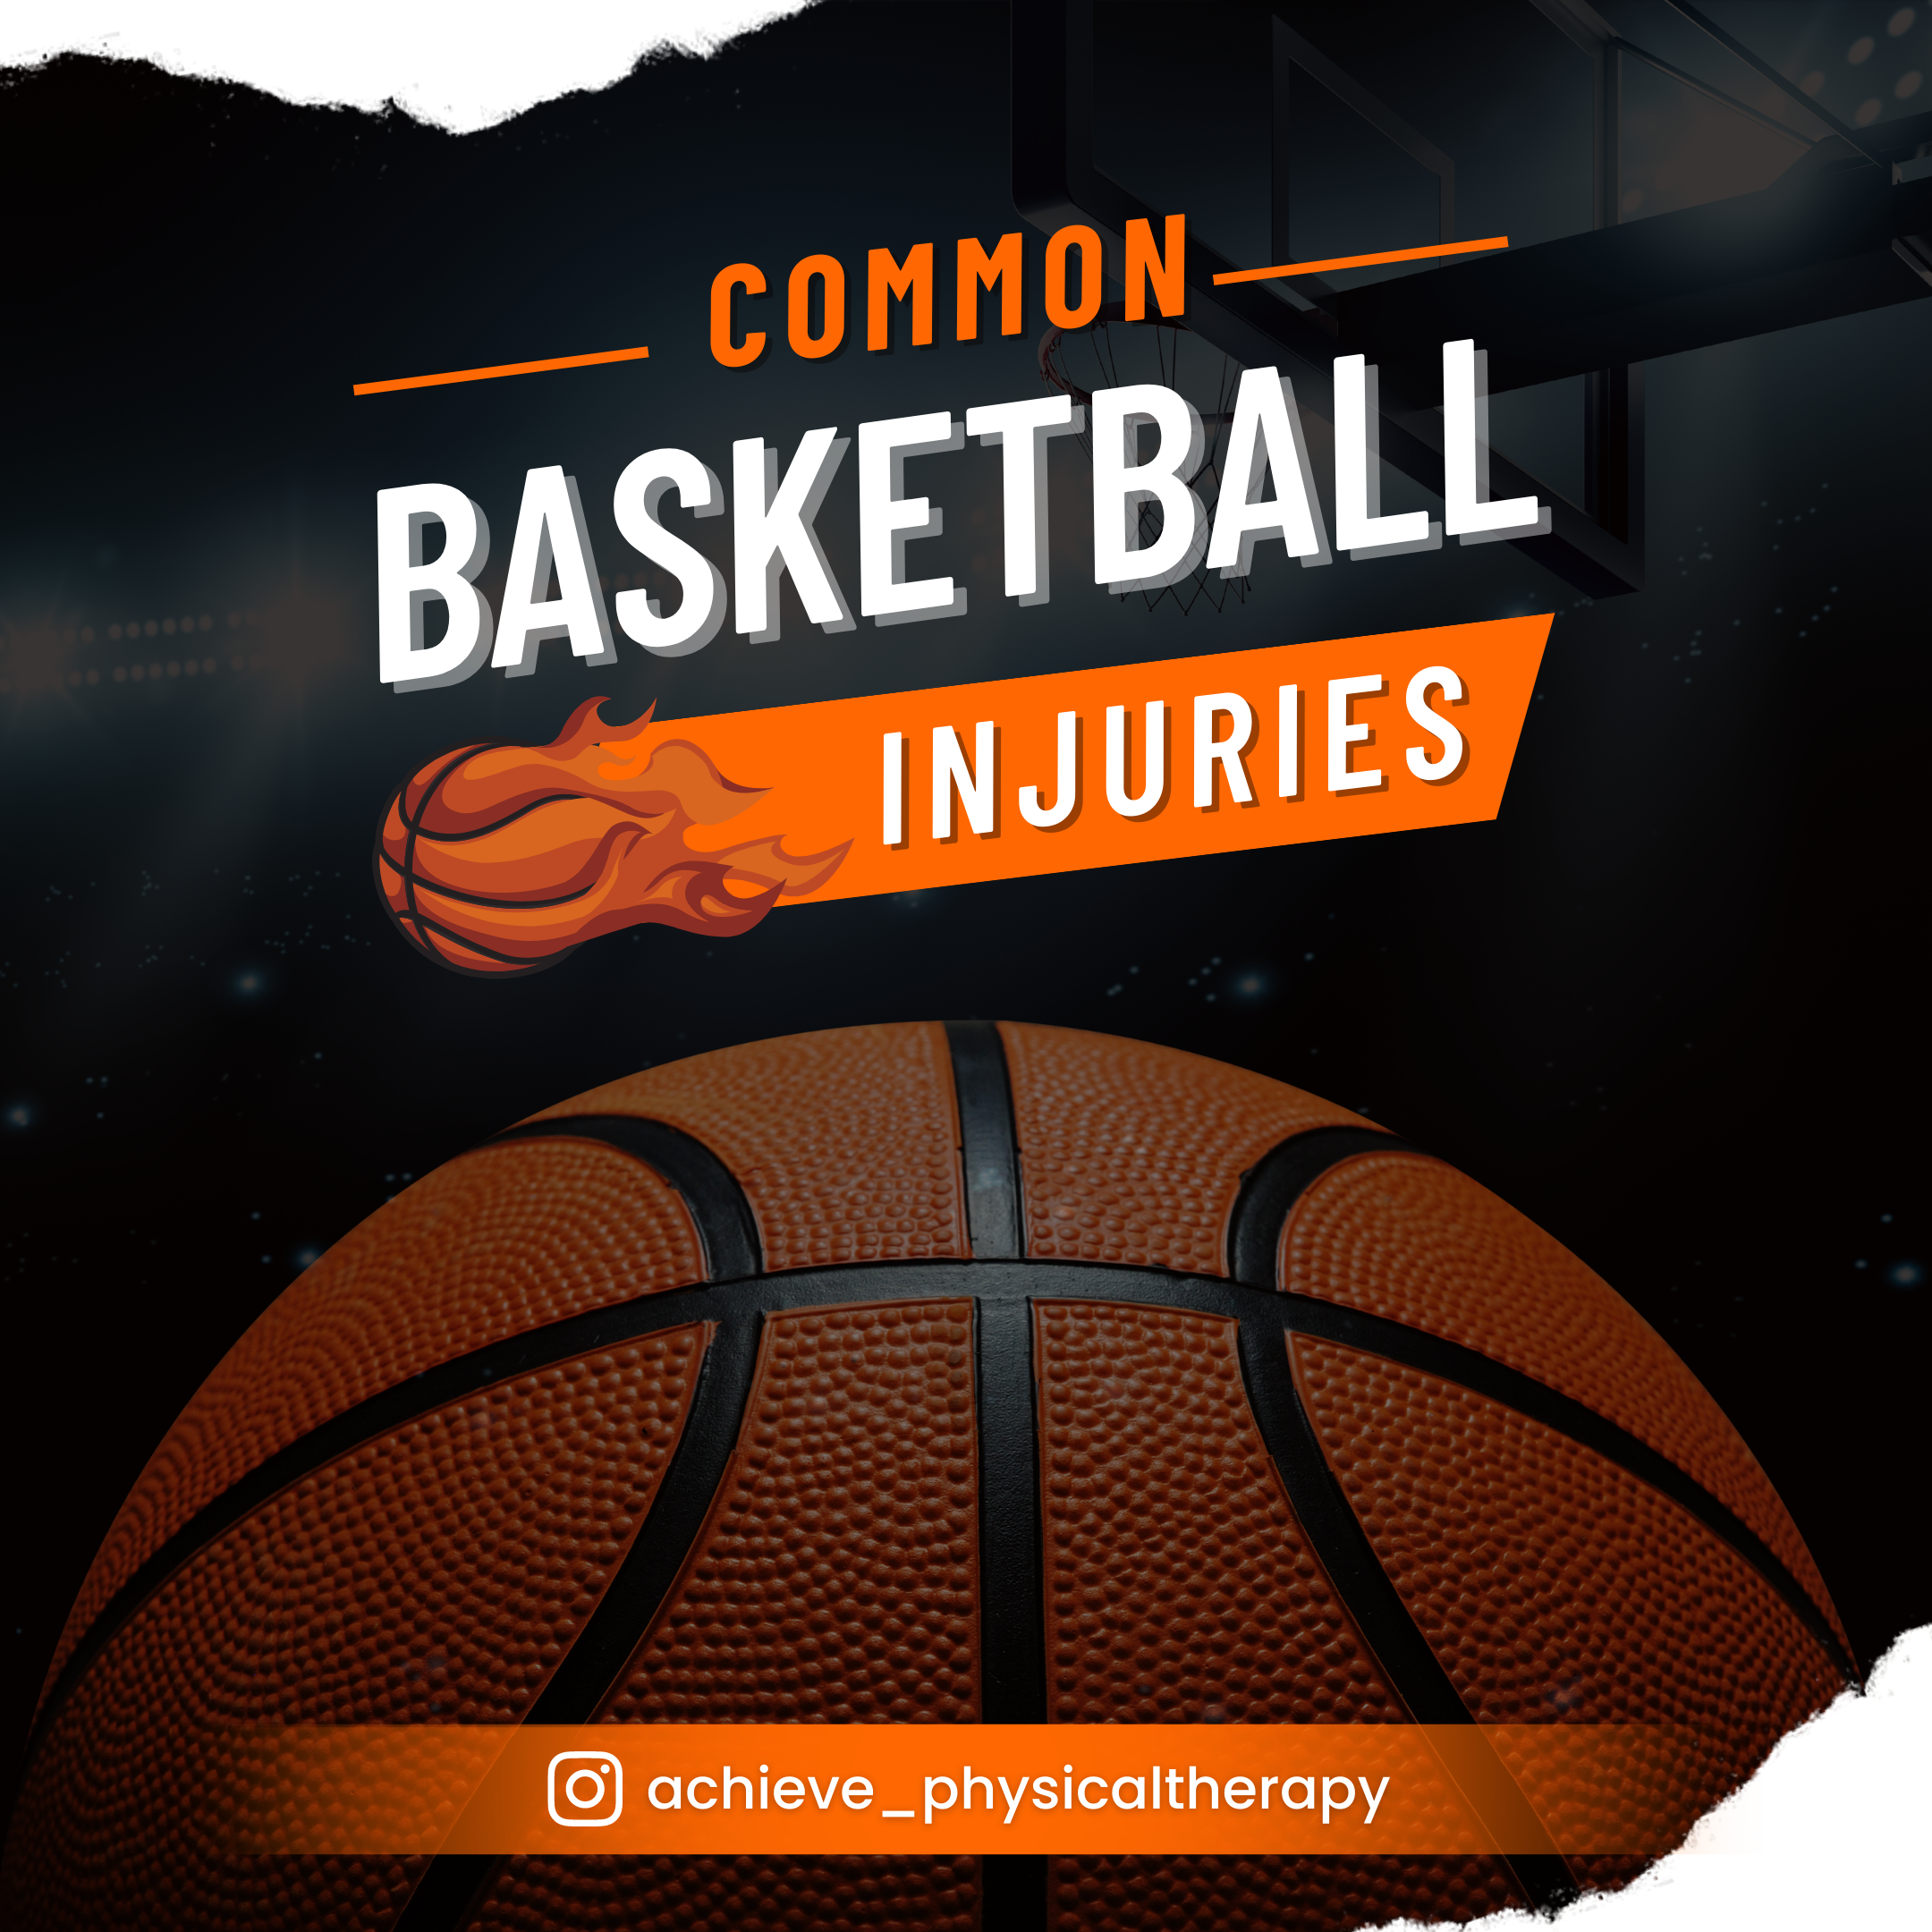 Common basketball injuries